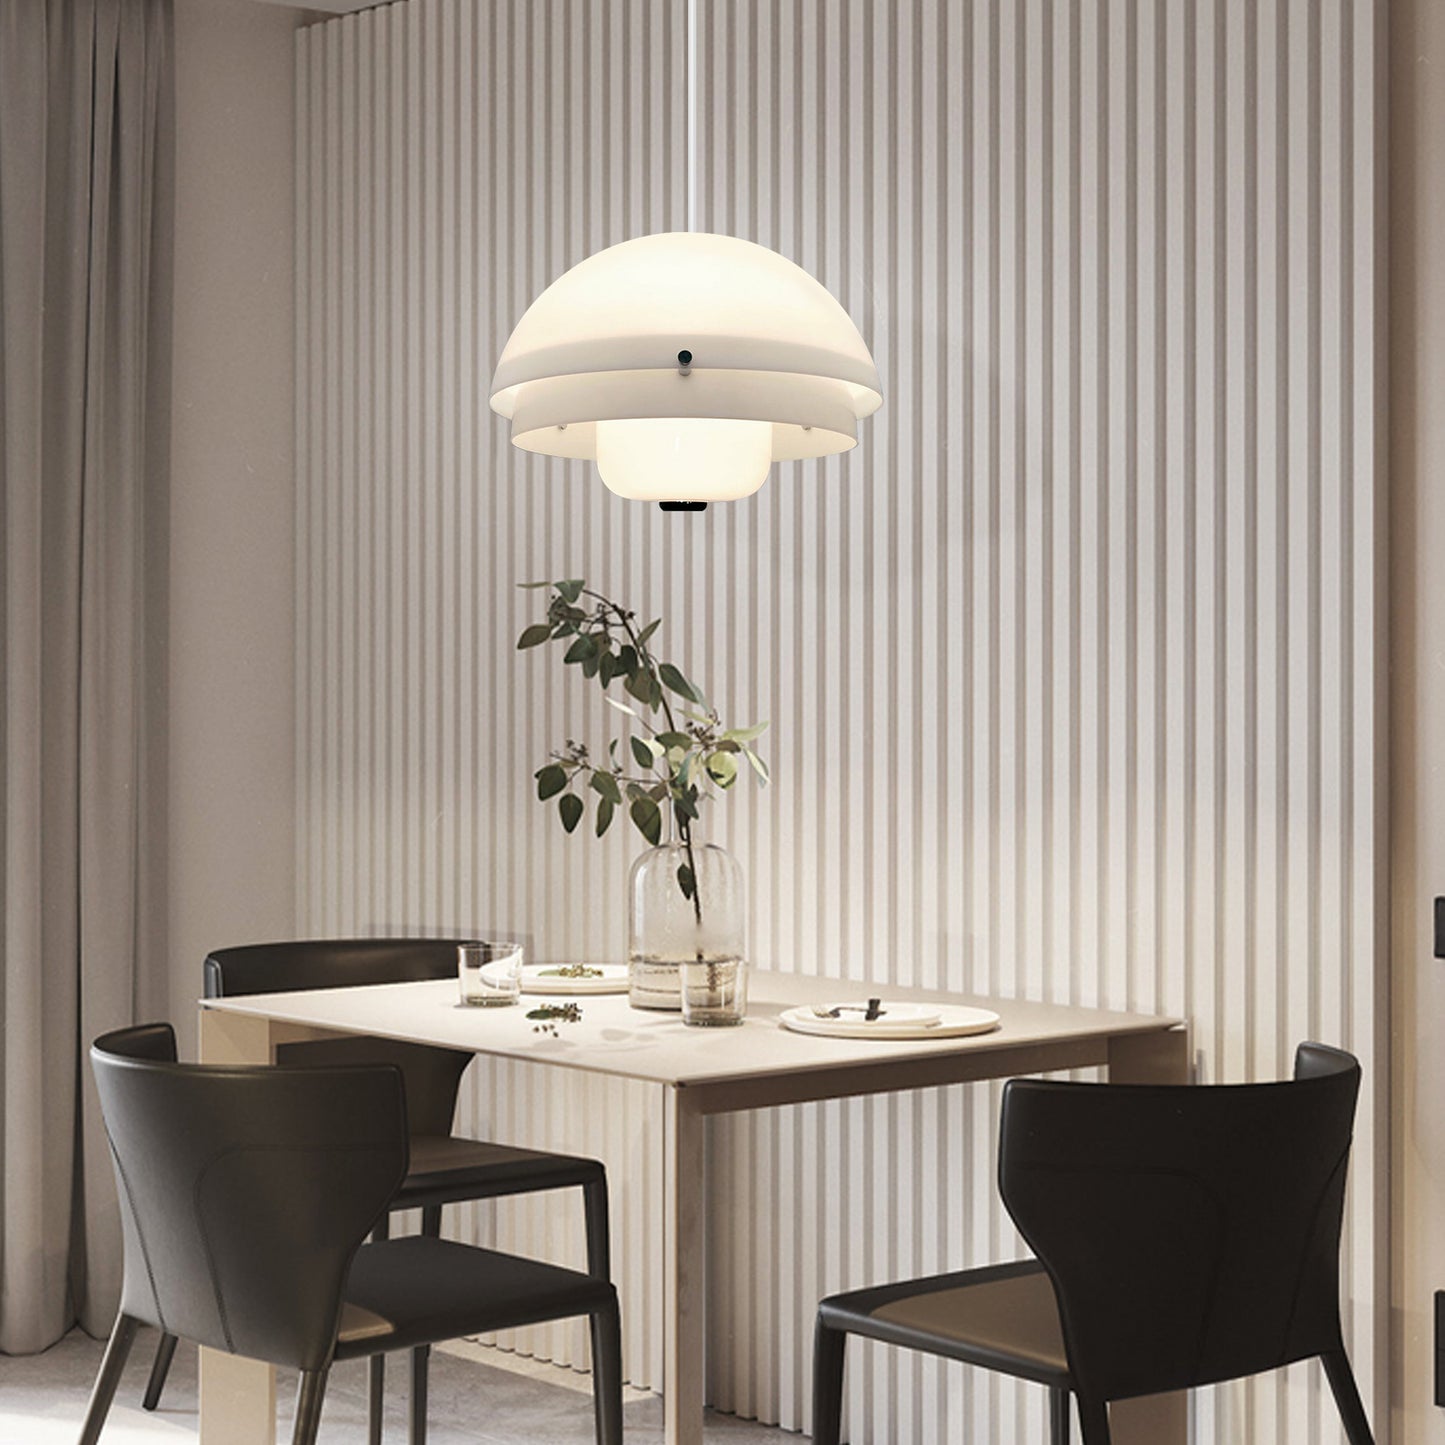 (N) ARTURESTHOME Modern Minimalist Bauhaus Dining Room Lighting Indoor Half Oval Chandelier